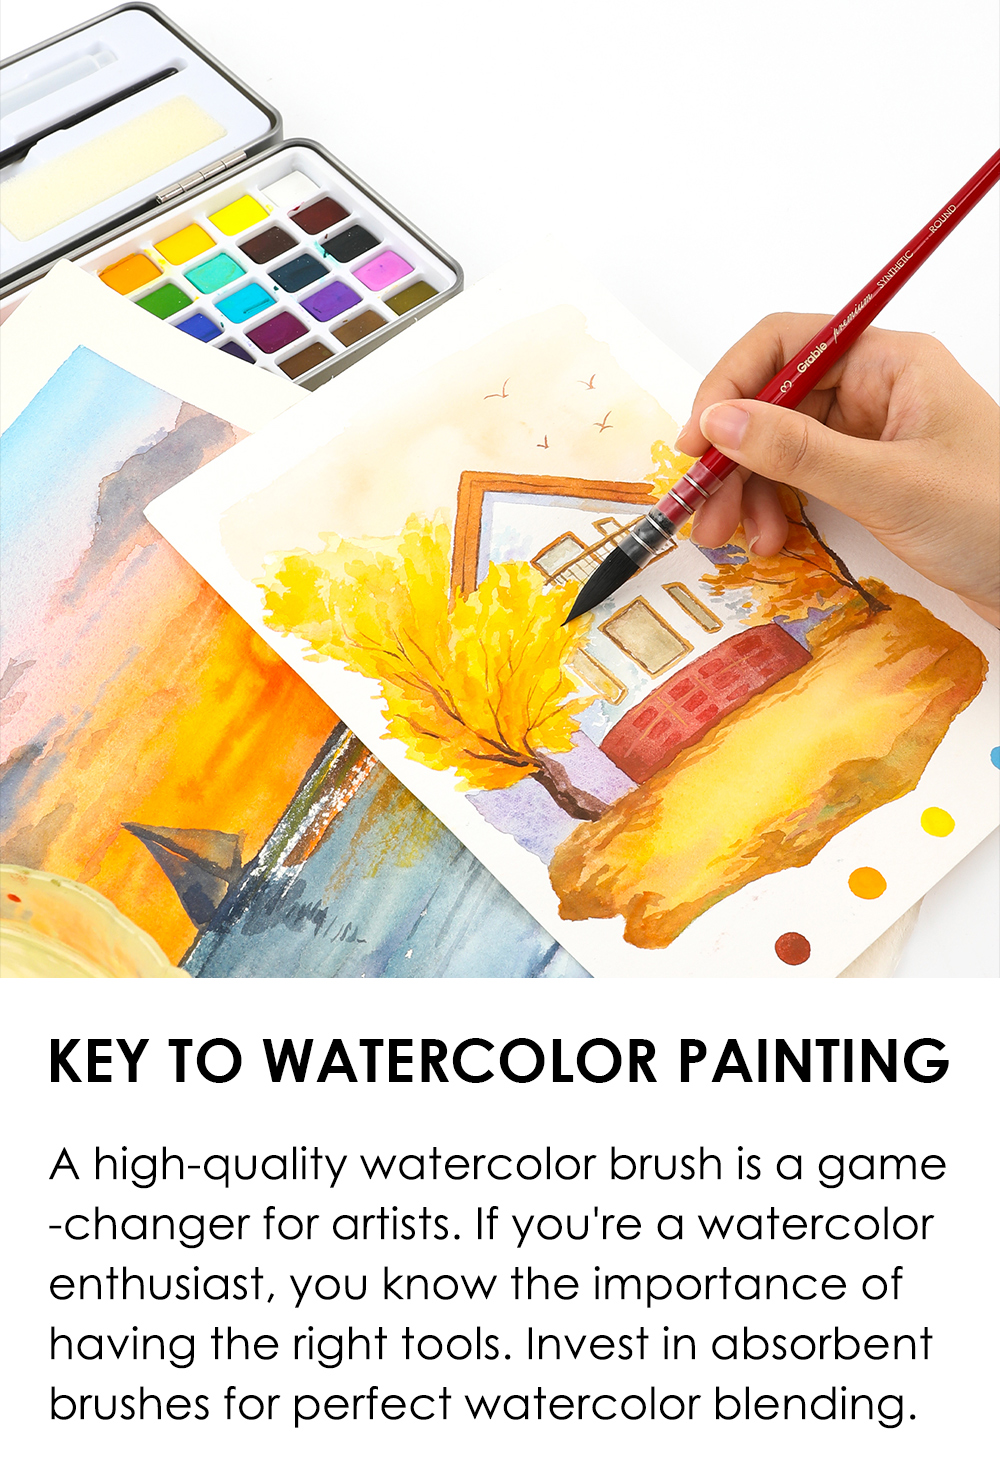 Review & Unboxing of a GRABIE Watercolor Bonanza! 